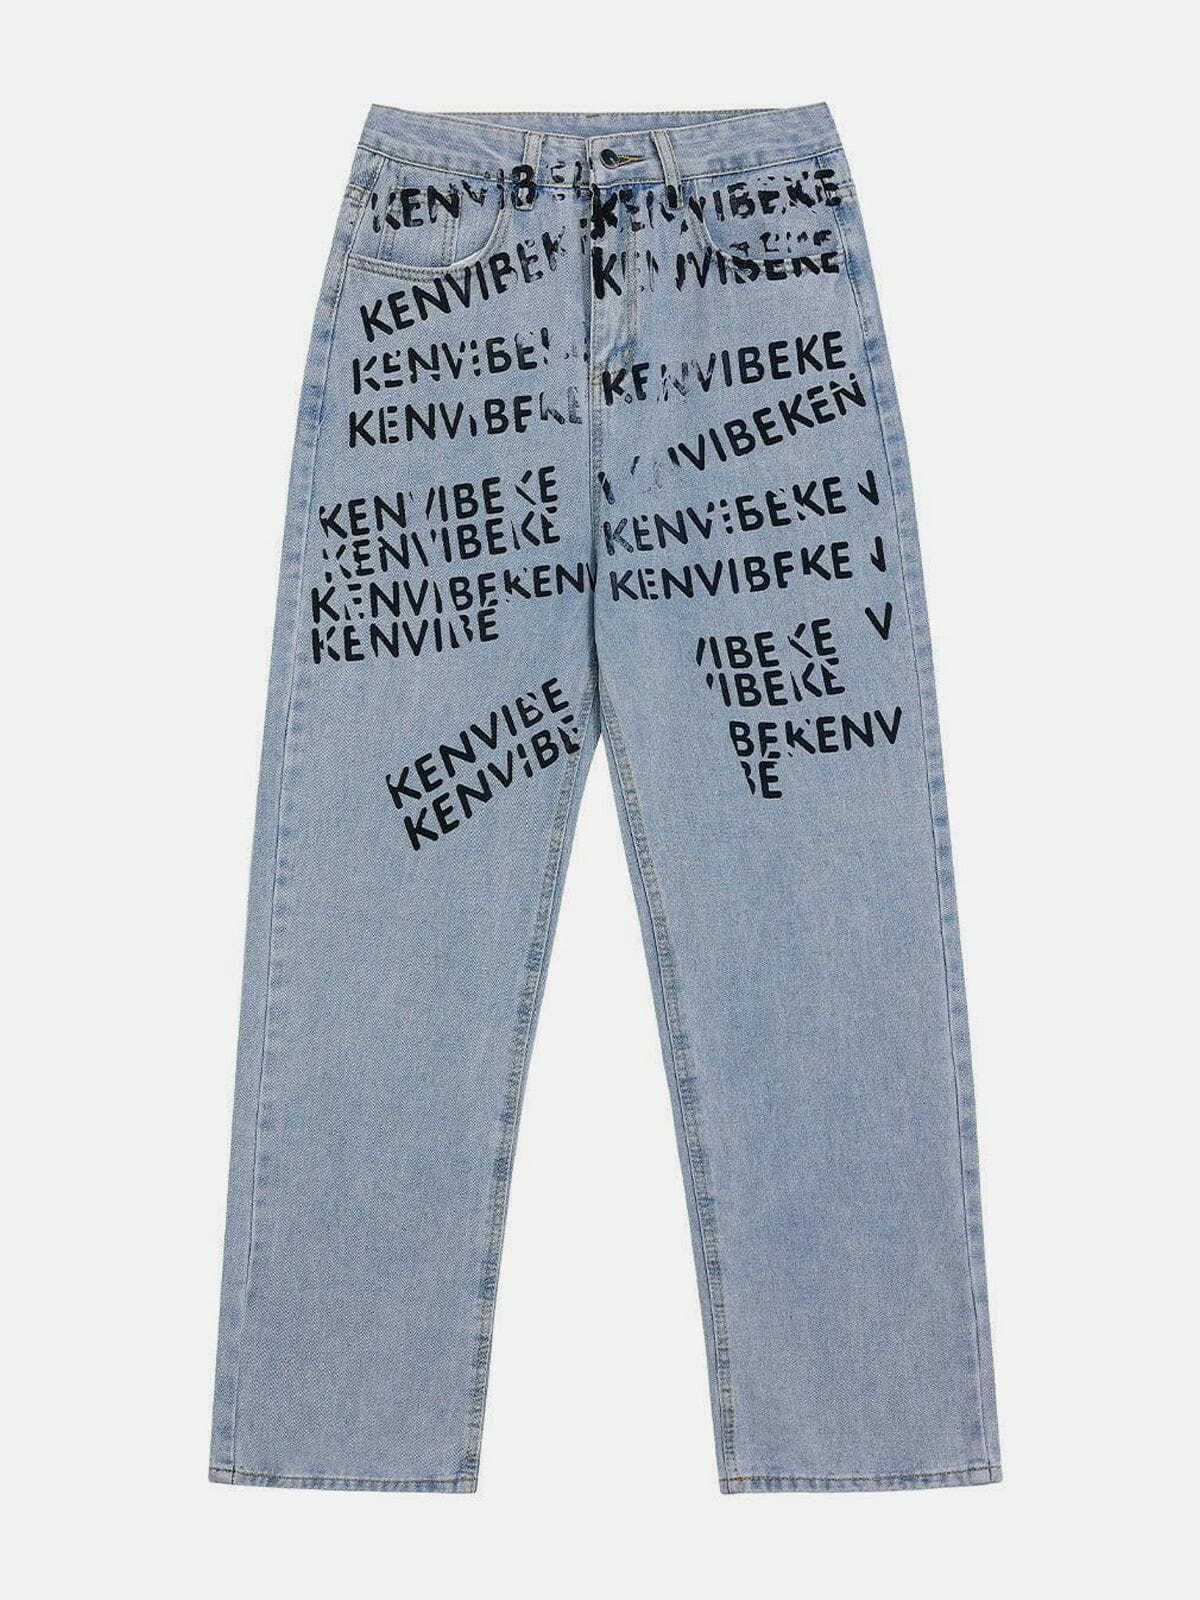 custom letter print jeans edgy & youthful denim 2126